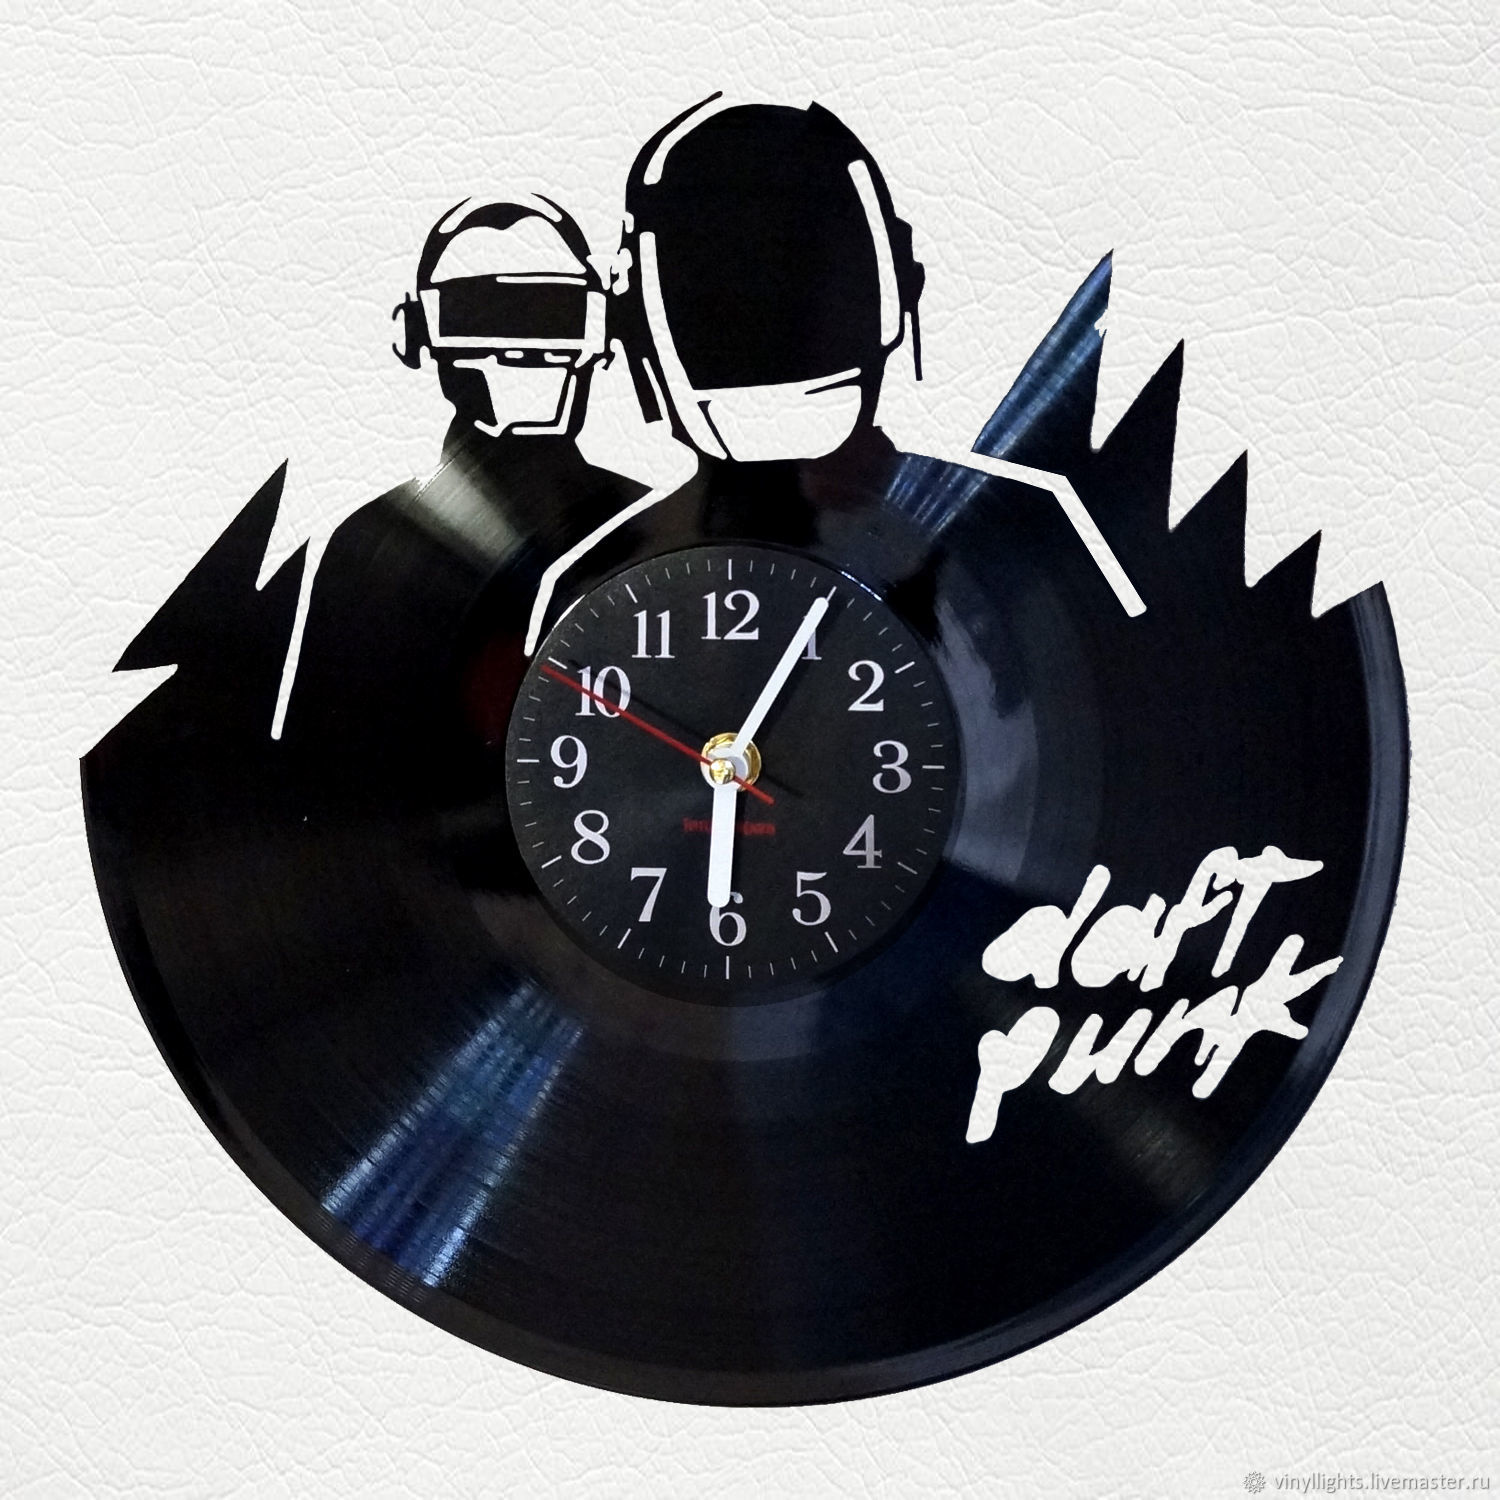 Vinyl Record Wall Clock With Led Lights Daft Punk Kupit Na